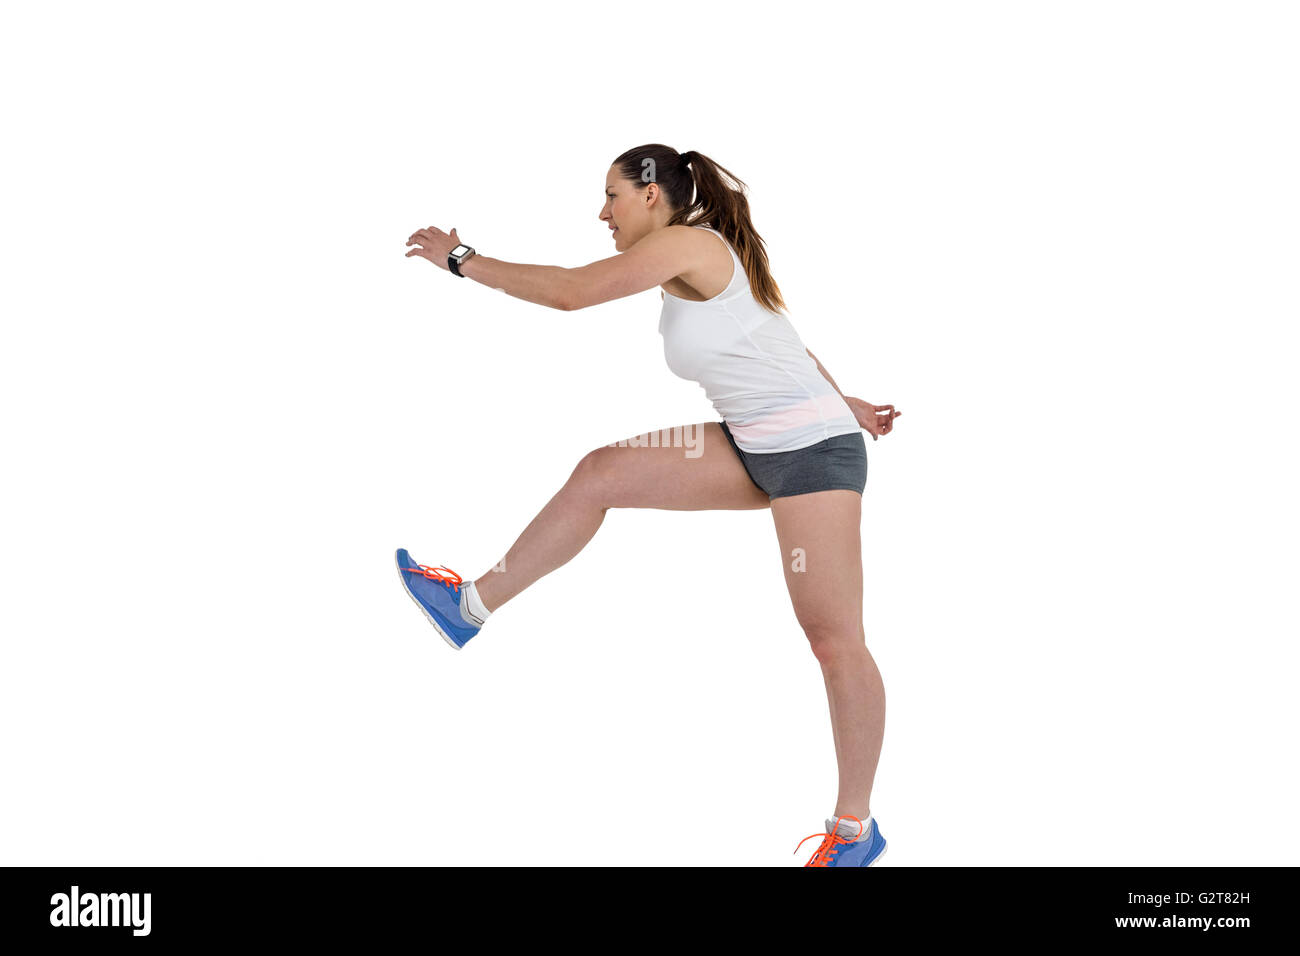 Athlete woman running on white background Stock Photo